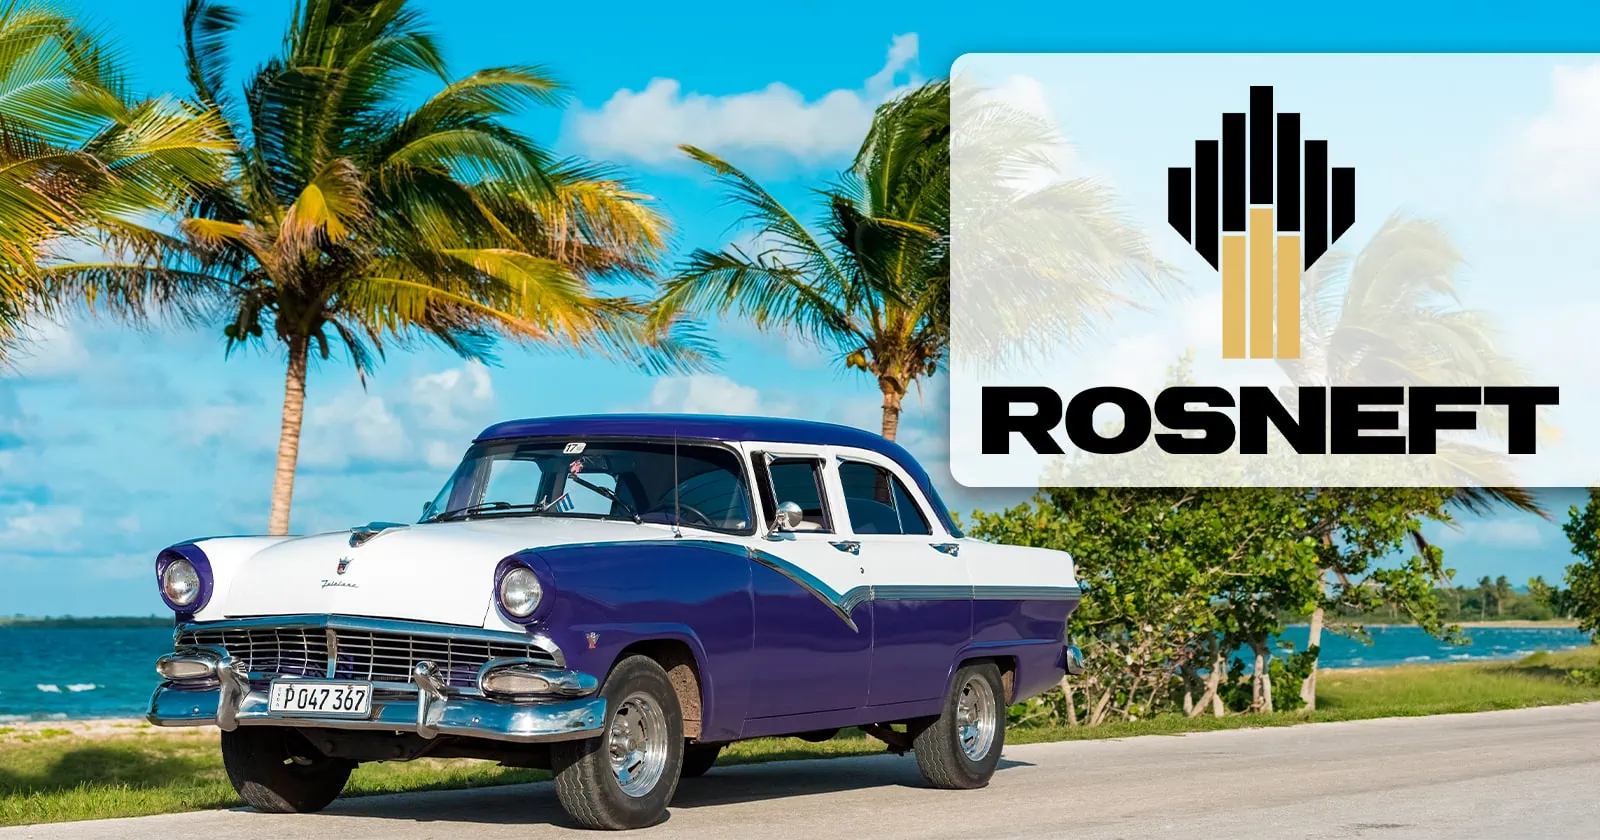 Rosneft: la Empresa Rusa que Prefiere a Cuba Como Destino Turístico